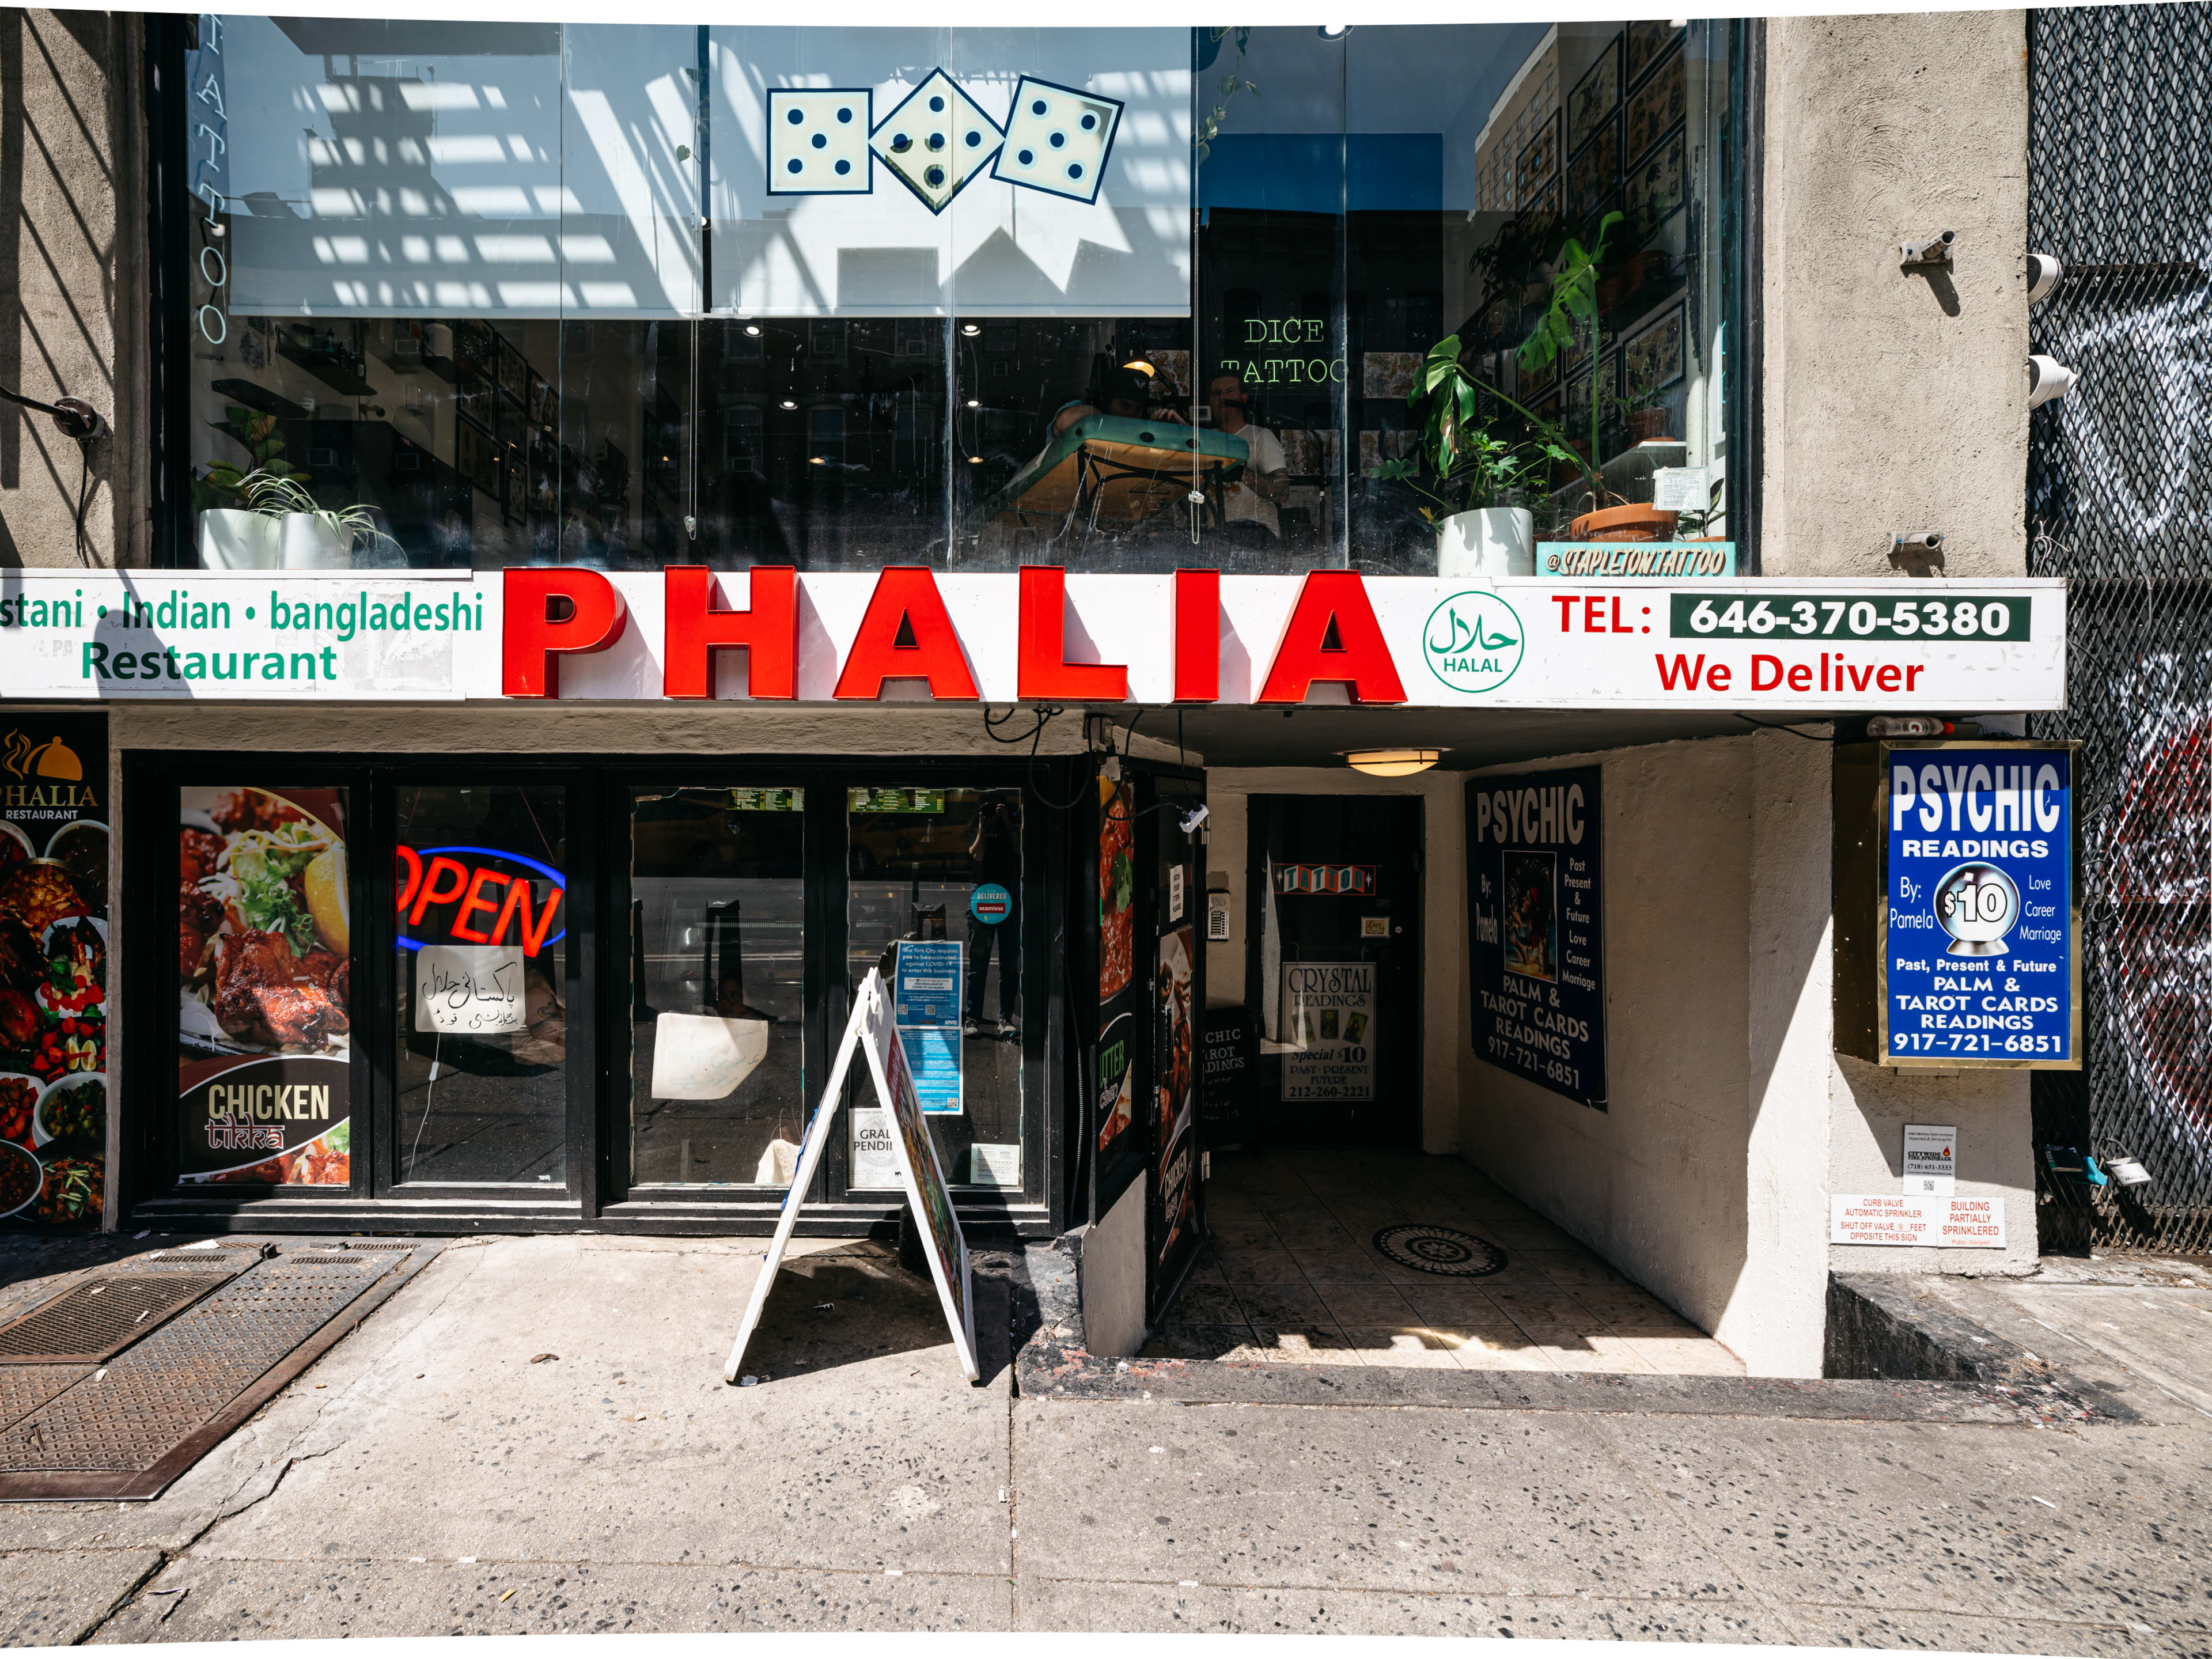 Phalia review image